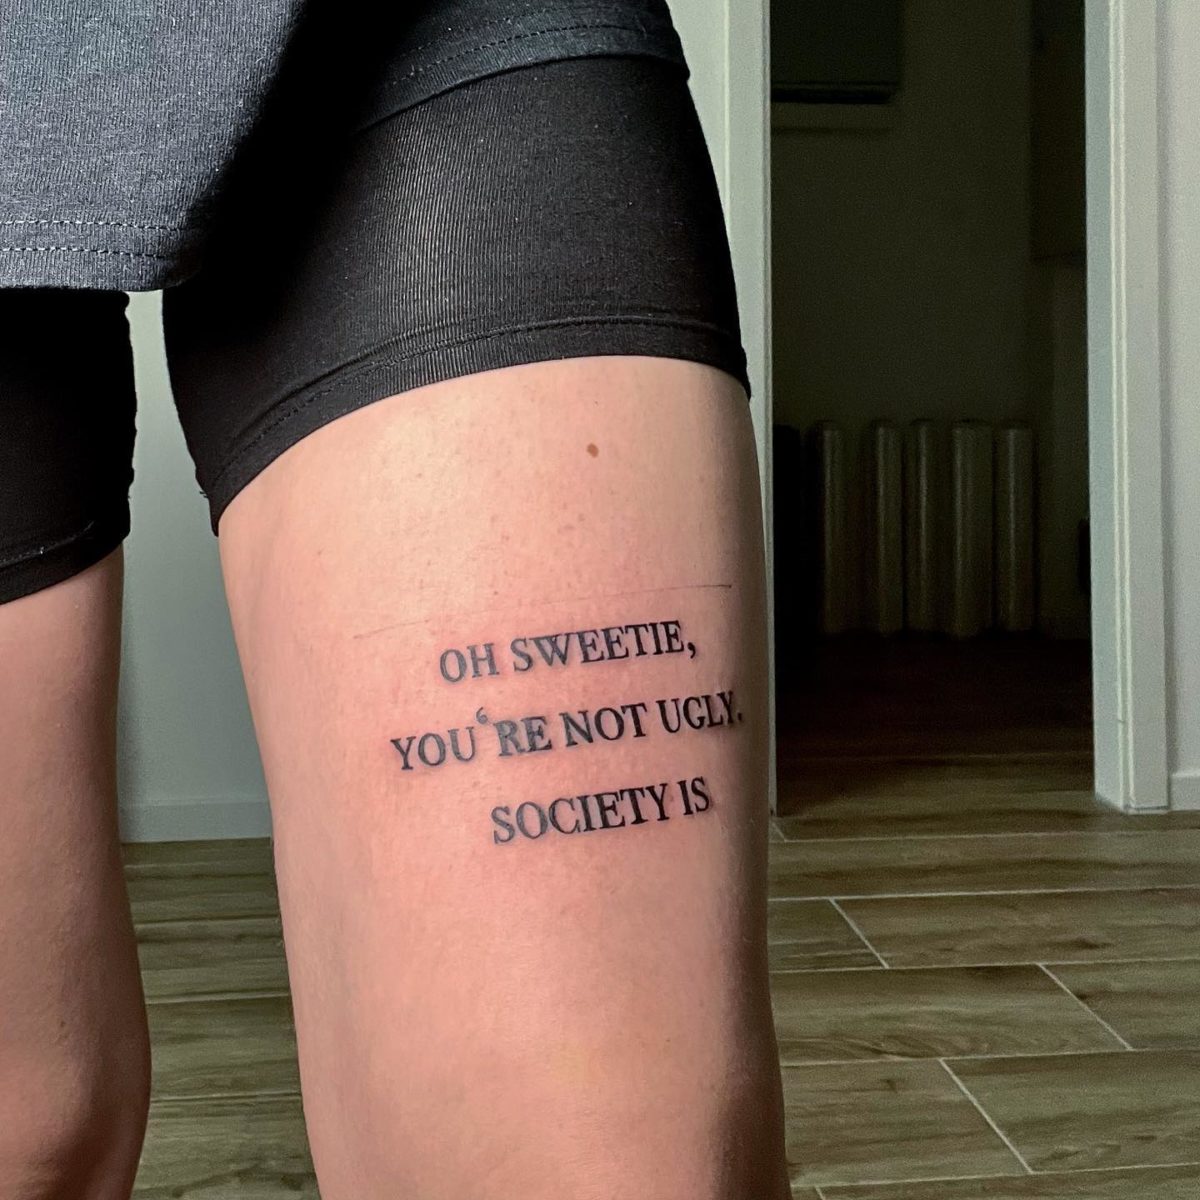 Self-Love Tattoos